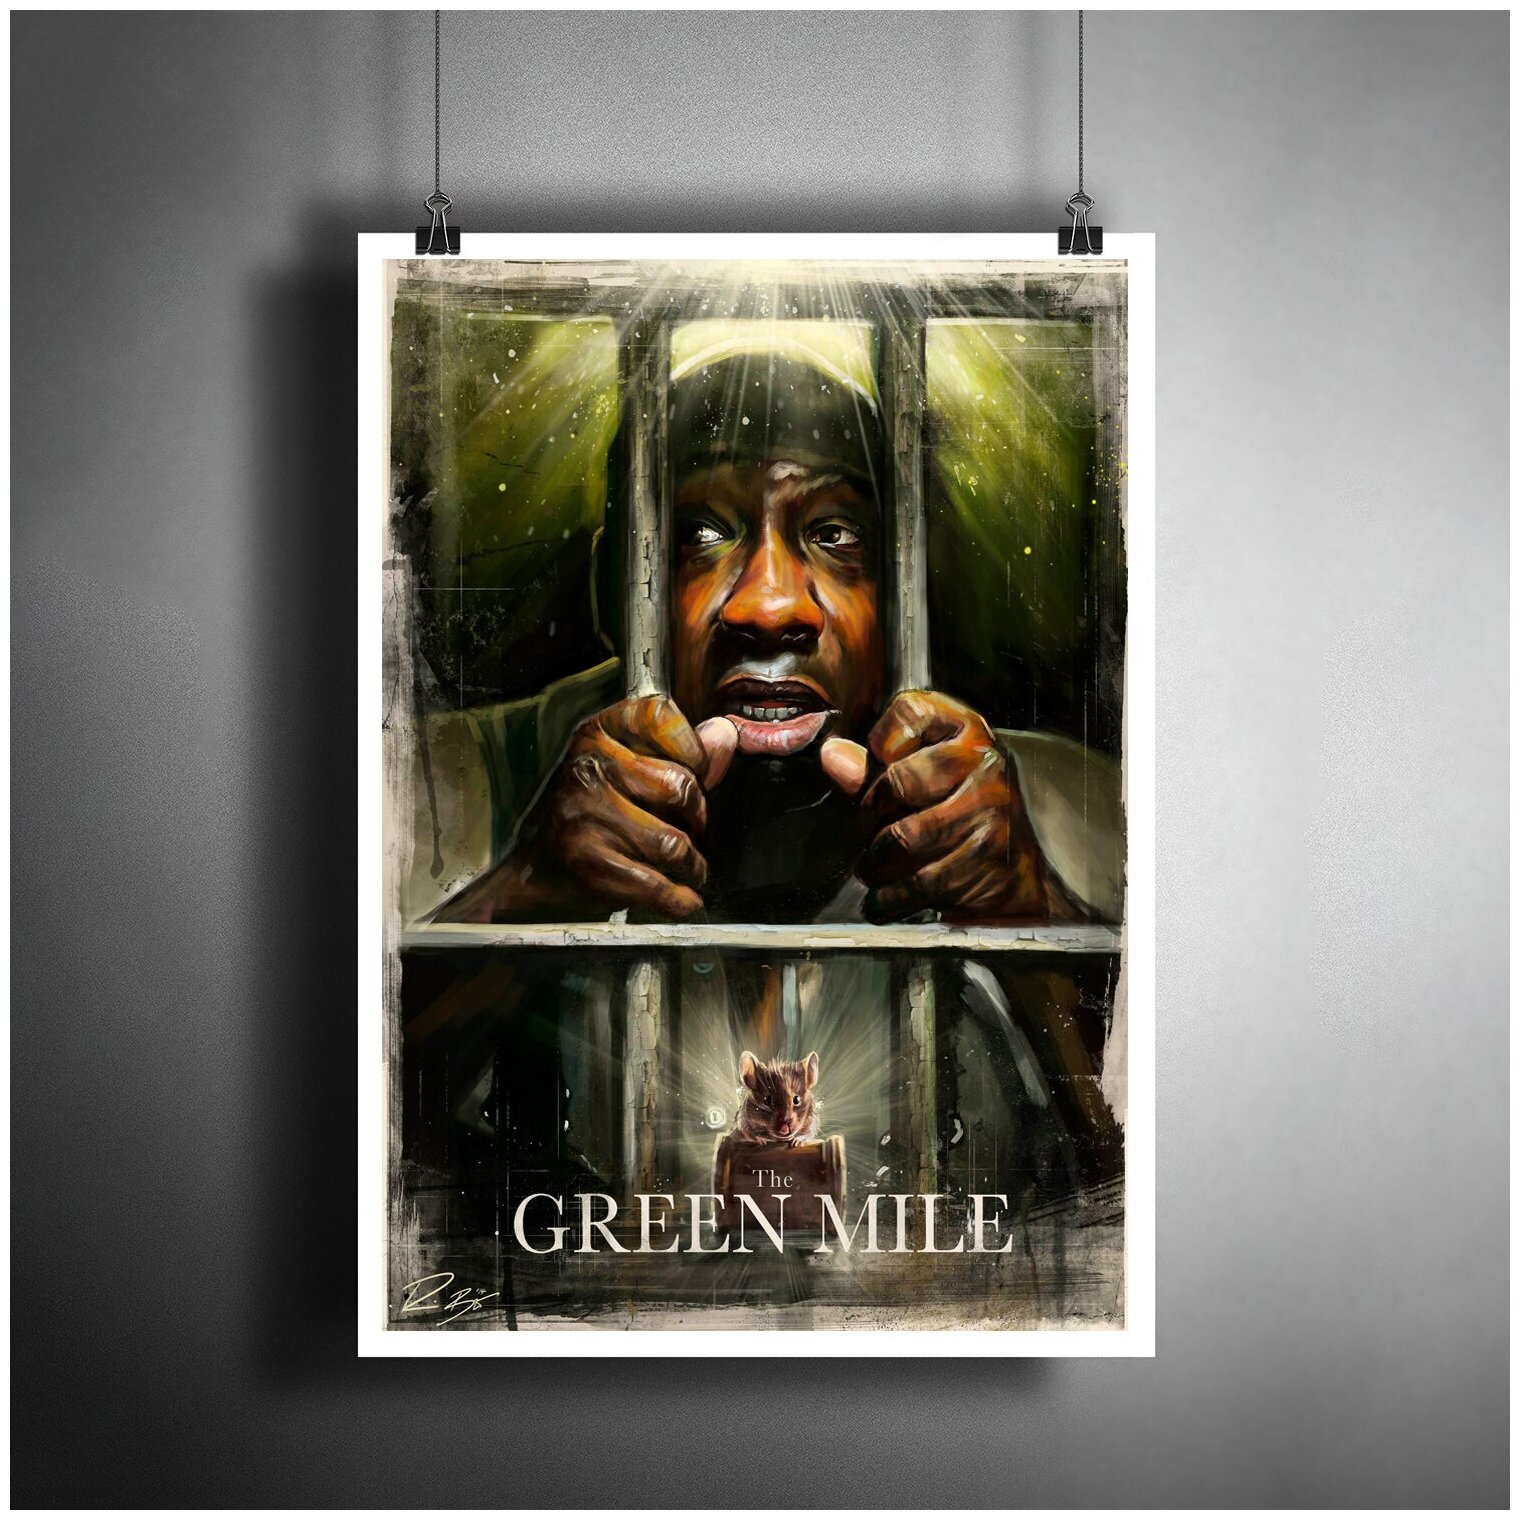 Постер плакат для интерьера "Фильм: Зелёная Миля. The Green Mile"/ Декор дома, офиса, комнаты A3 (297 x 420 мм)